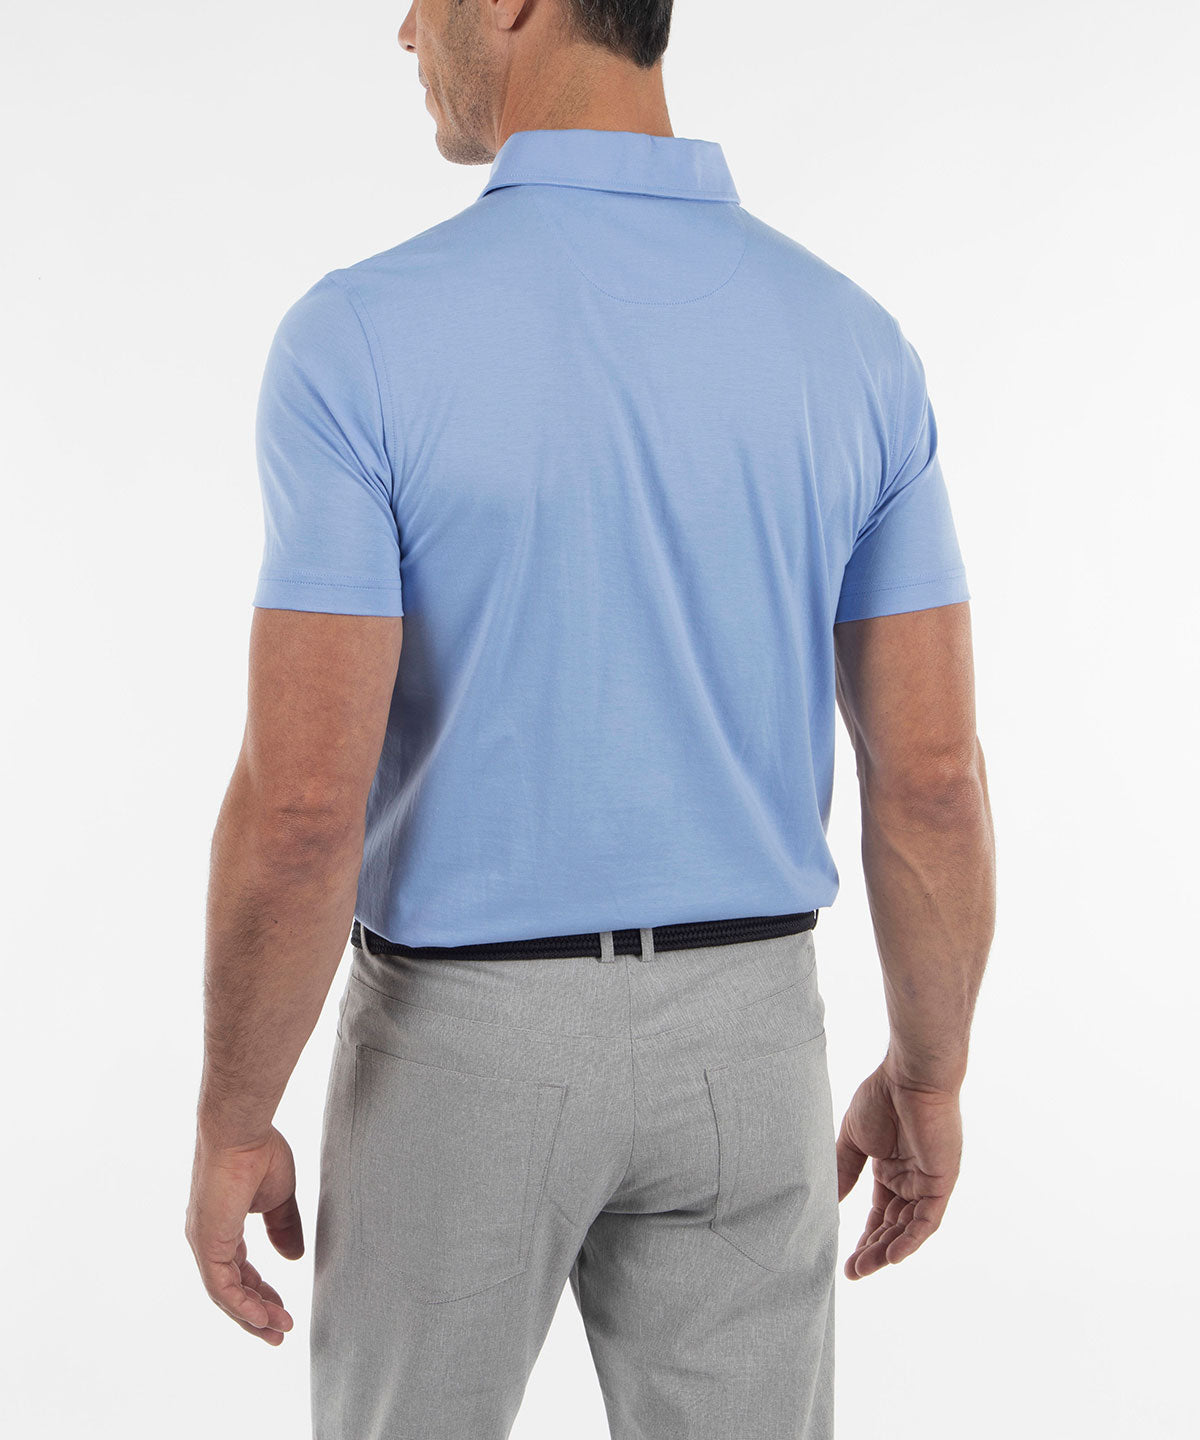 Men's Short Sleeve Polo Shirts Ultra-Soft Cotton Golf Shirts - White / S